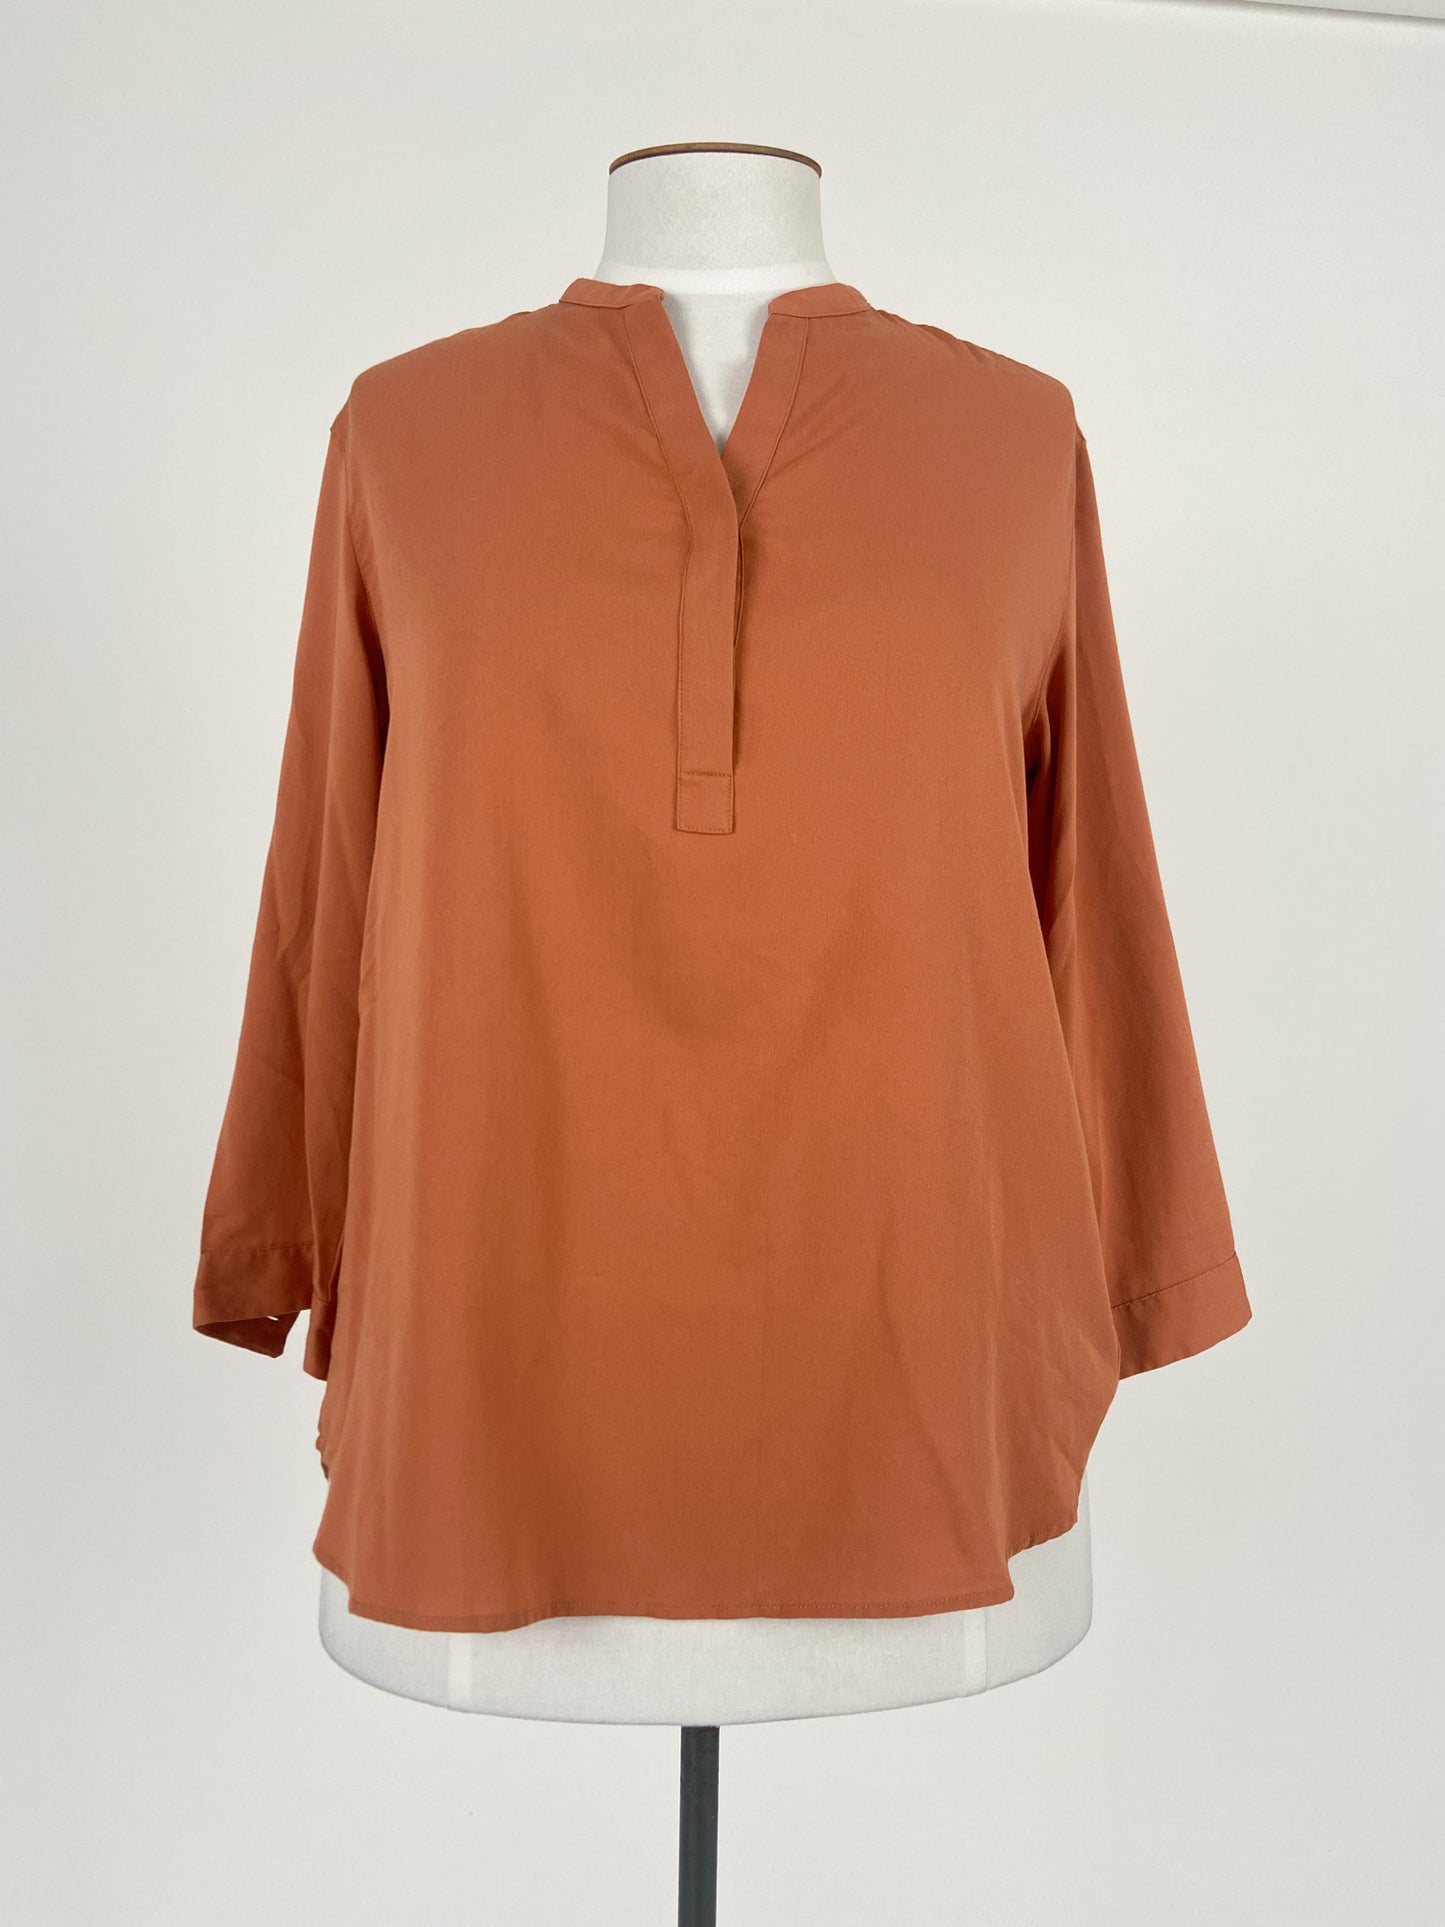 Uniqlo | Orange Casual/Workwear Top | Size M